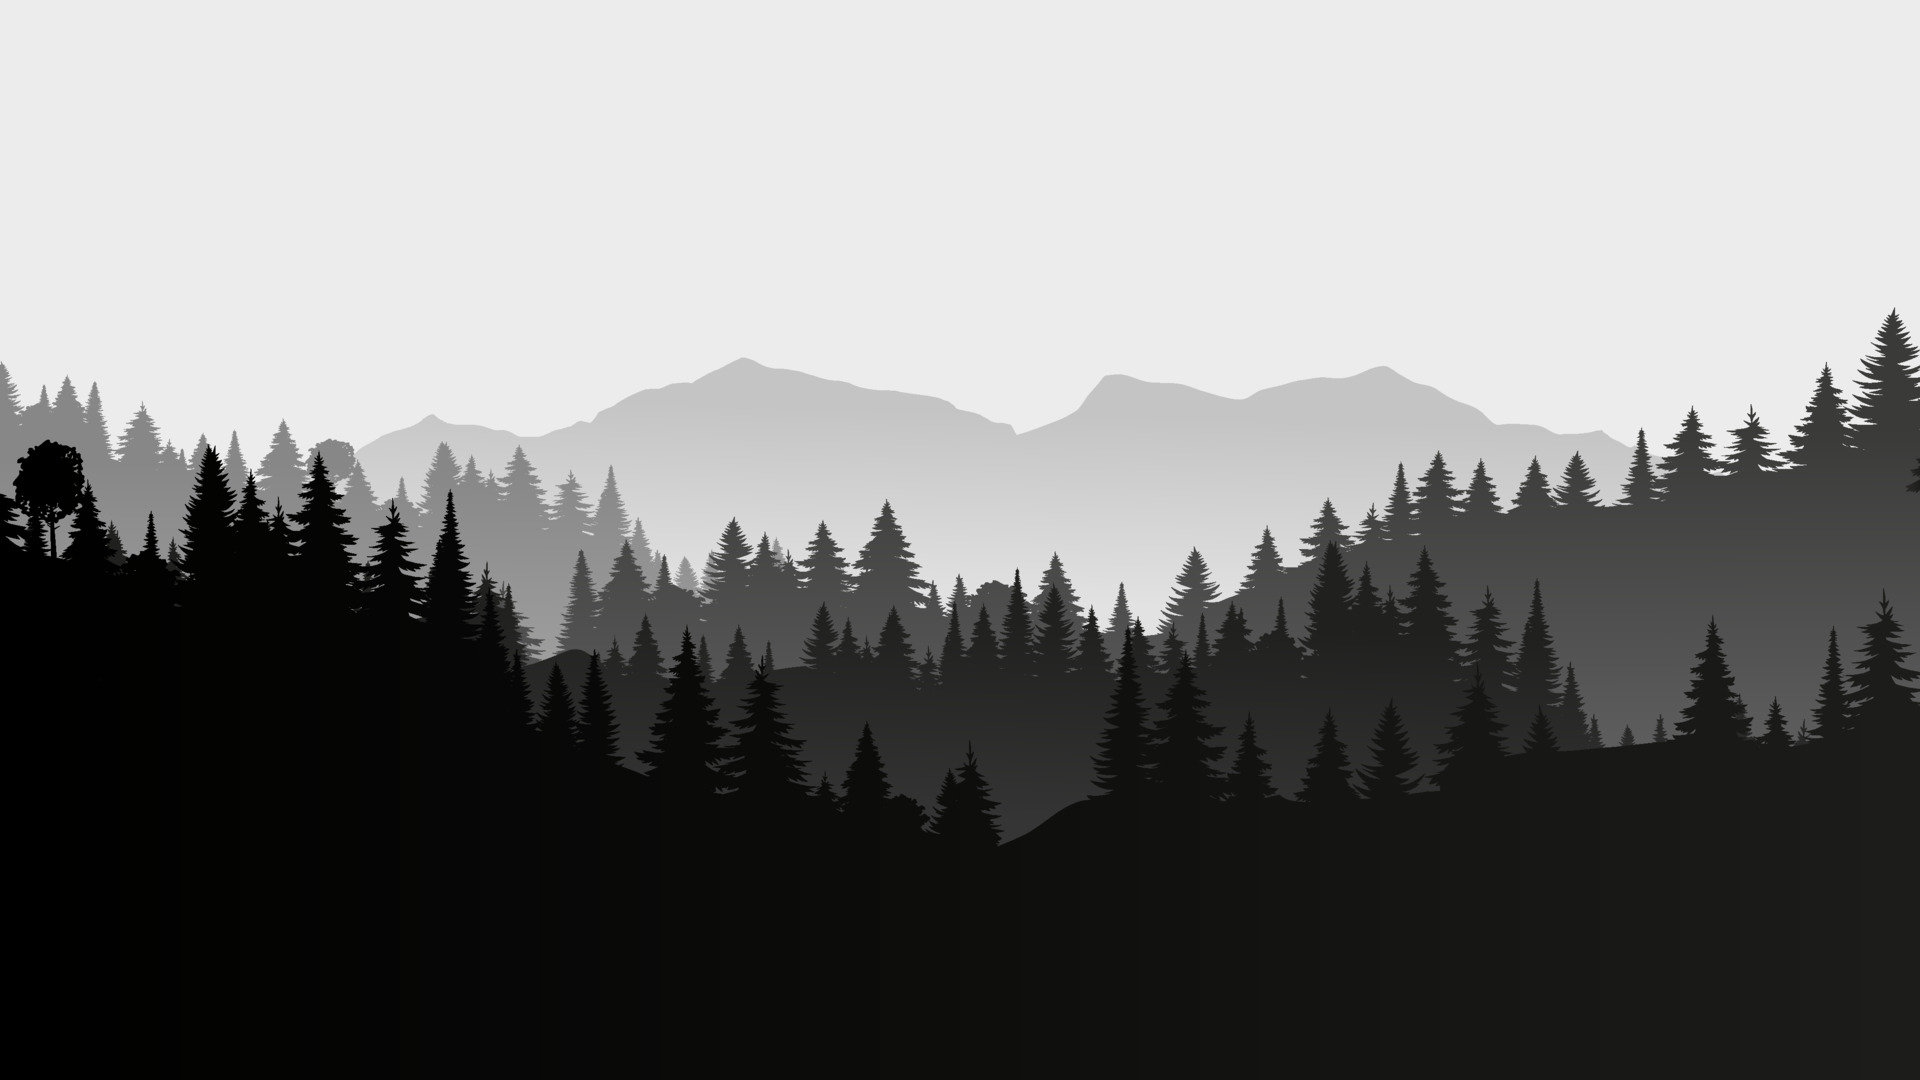 vecteezy_silhouette-landscape-with-fog-forest-pine-trees_9626037.jpg.ba6f3c939edc1d6ec0782a96d7dca035.jpg